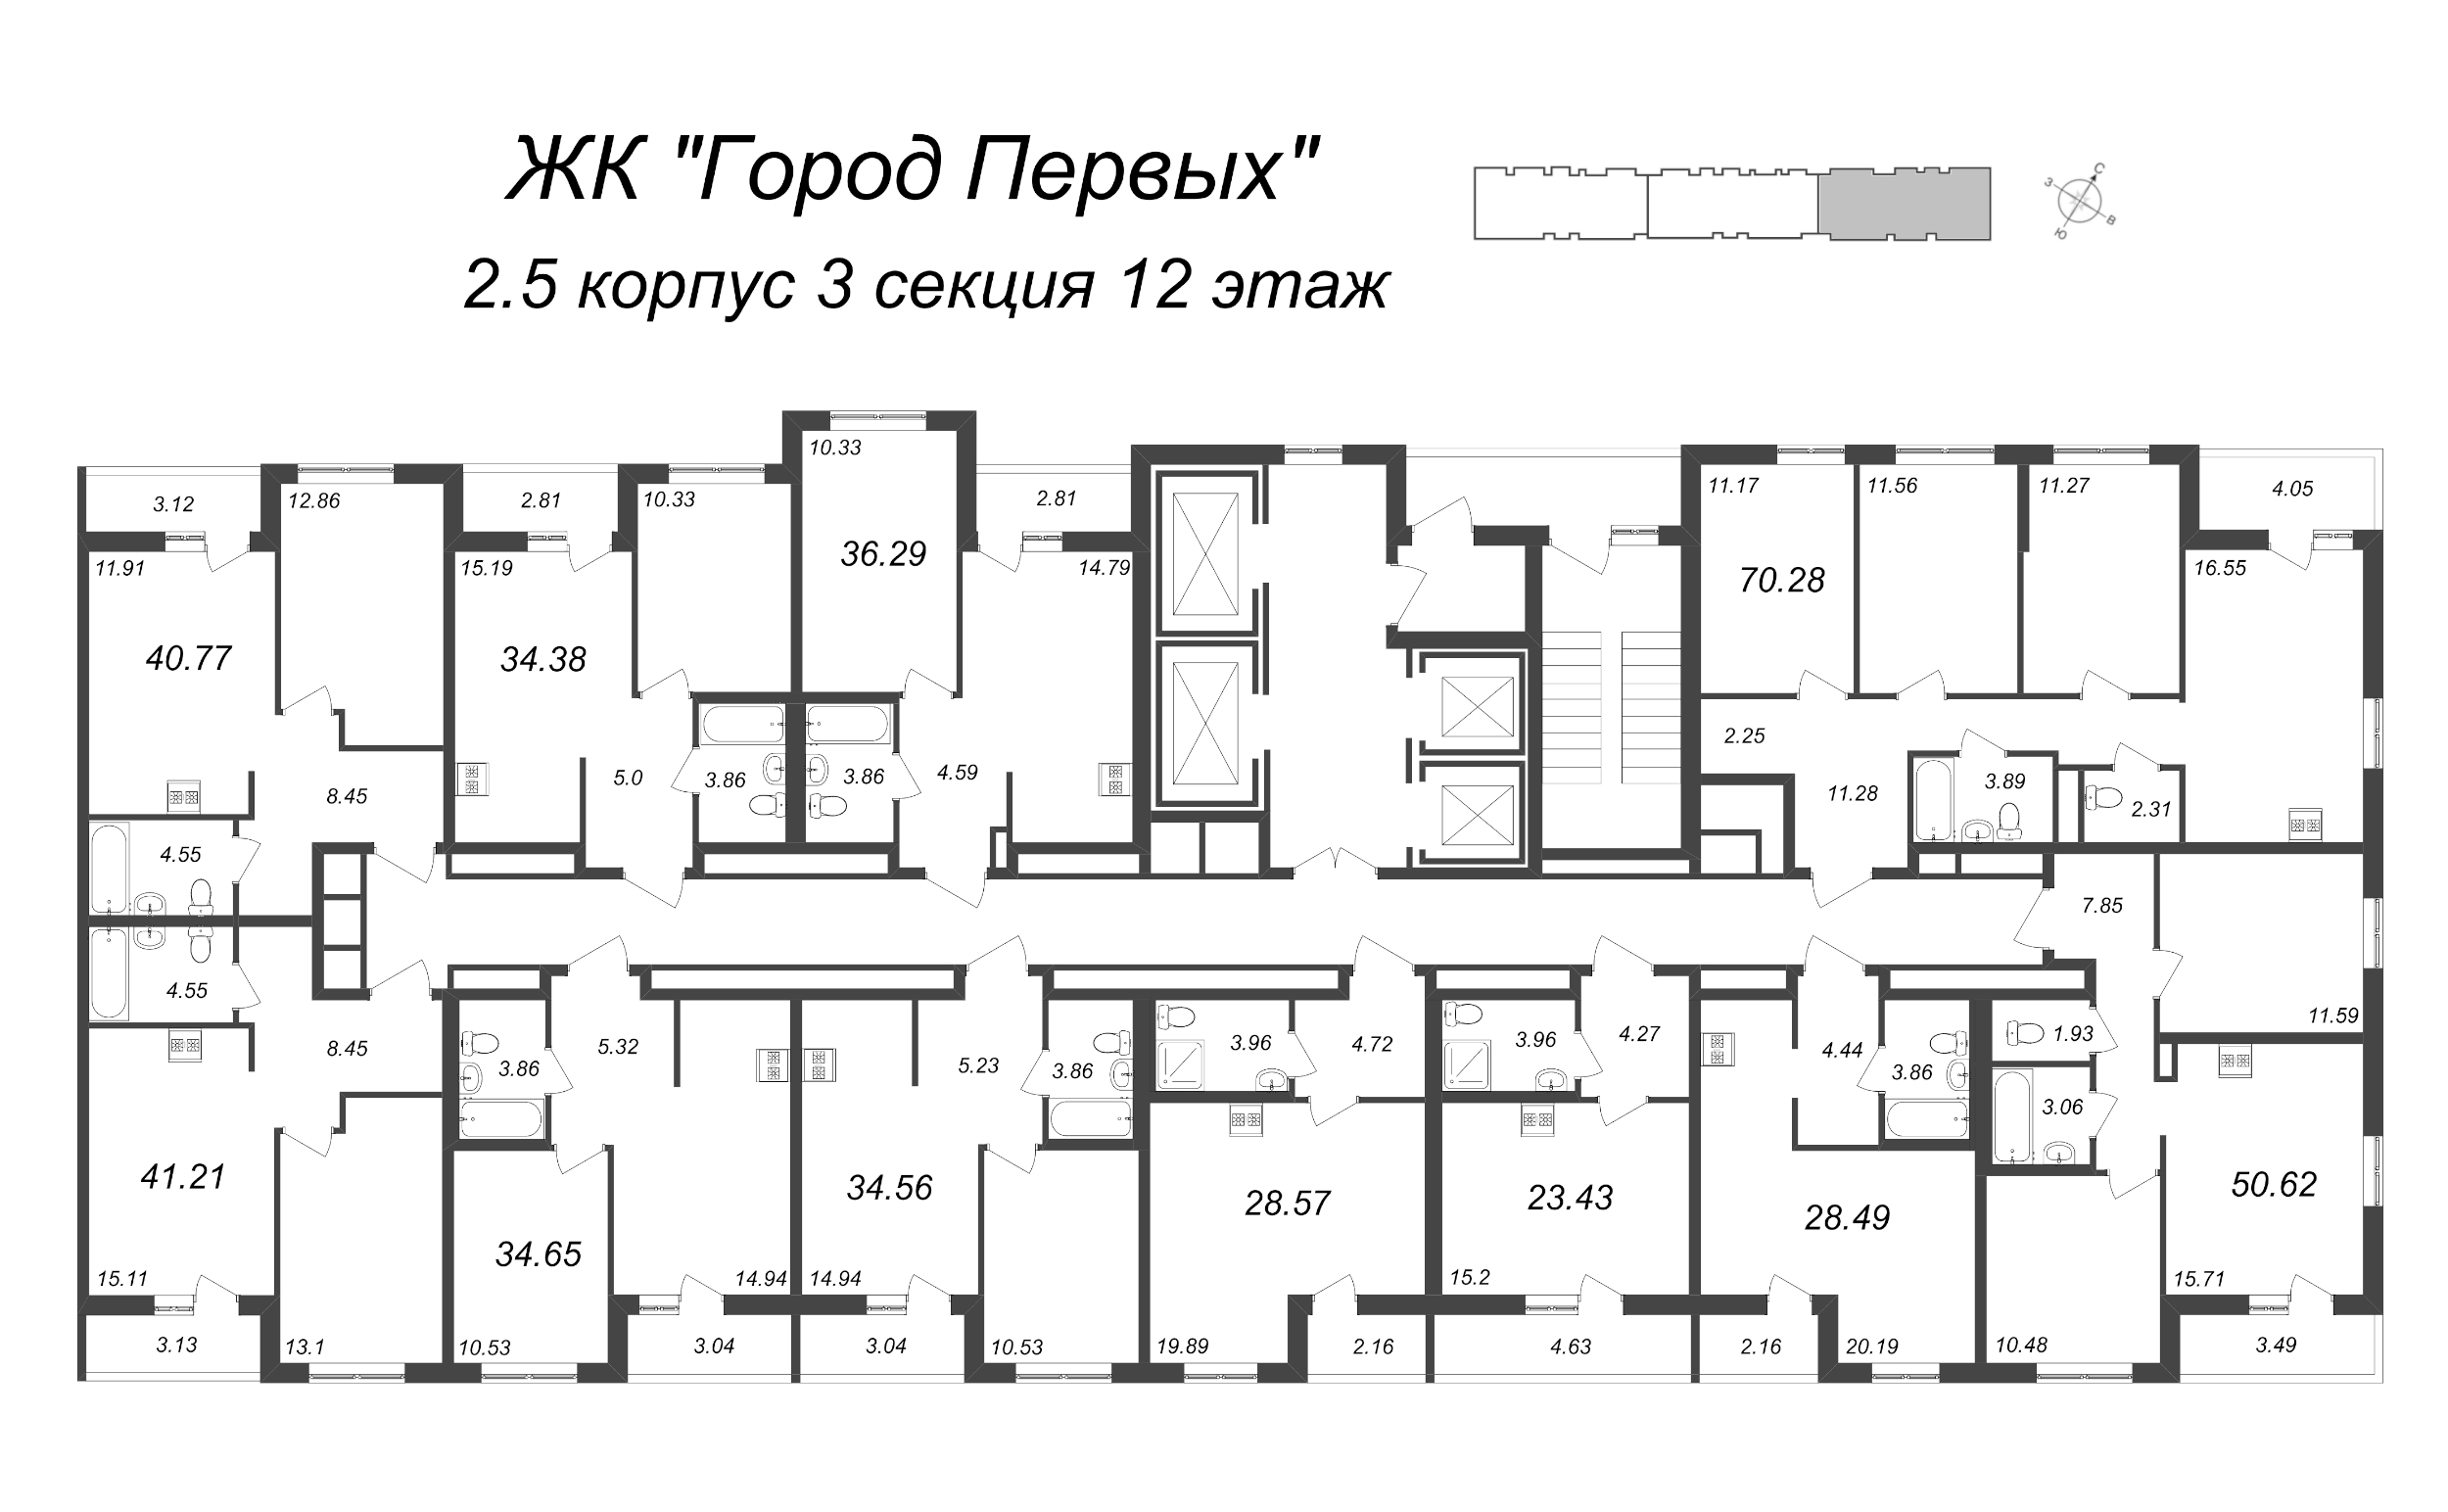 3-комнатная (Евро) квартира, 47.11 м² - планировка этажа